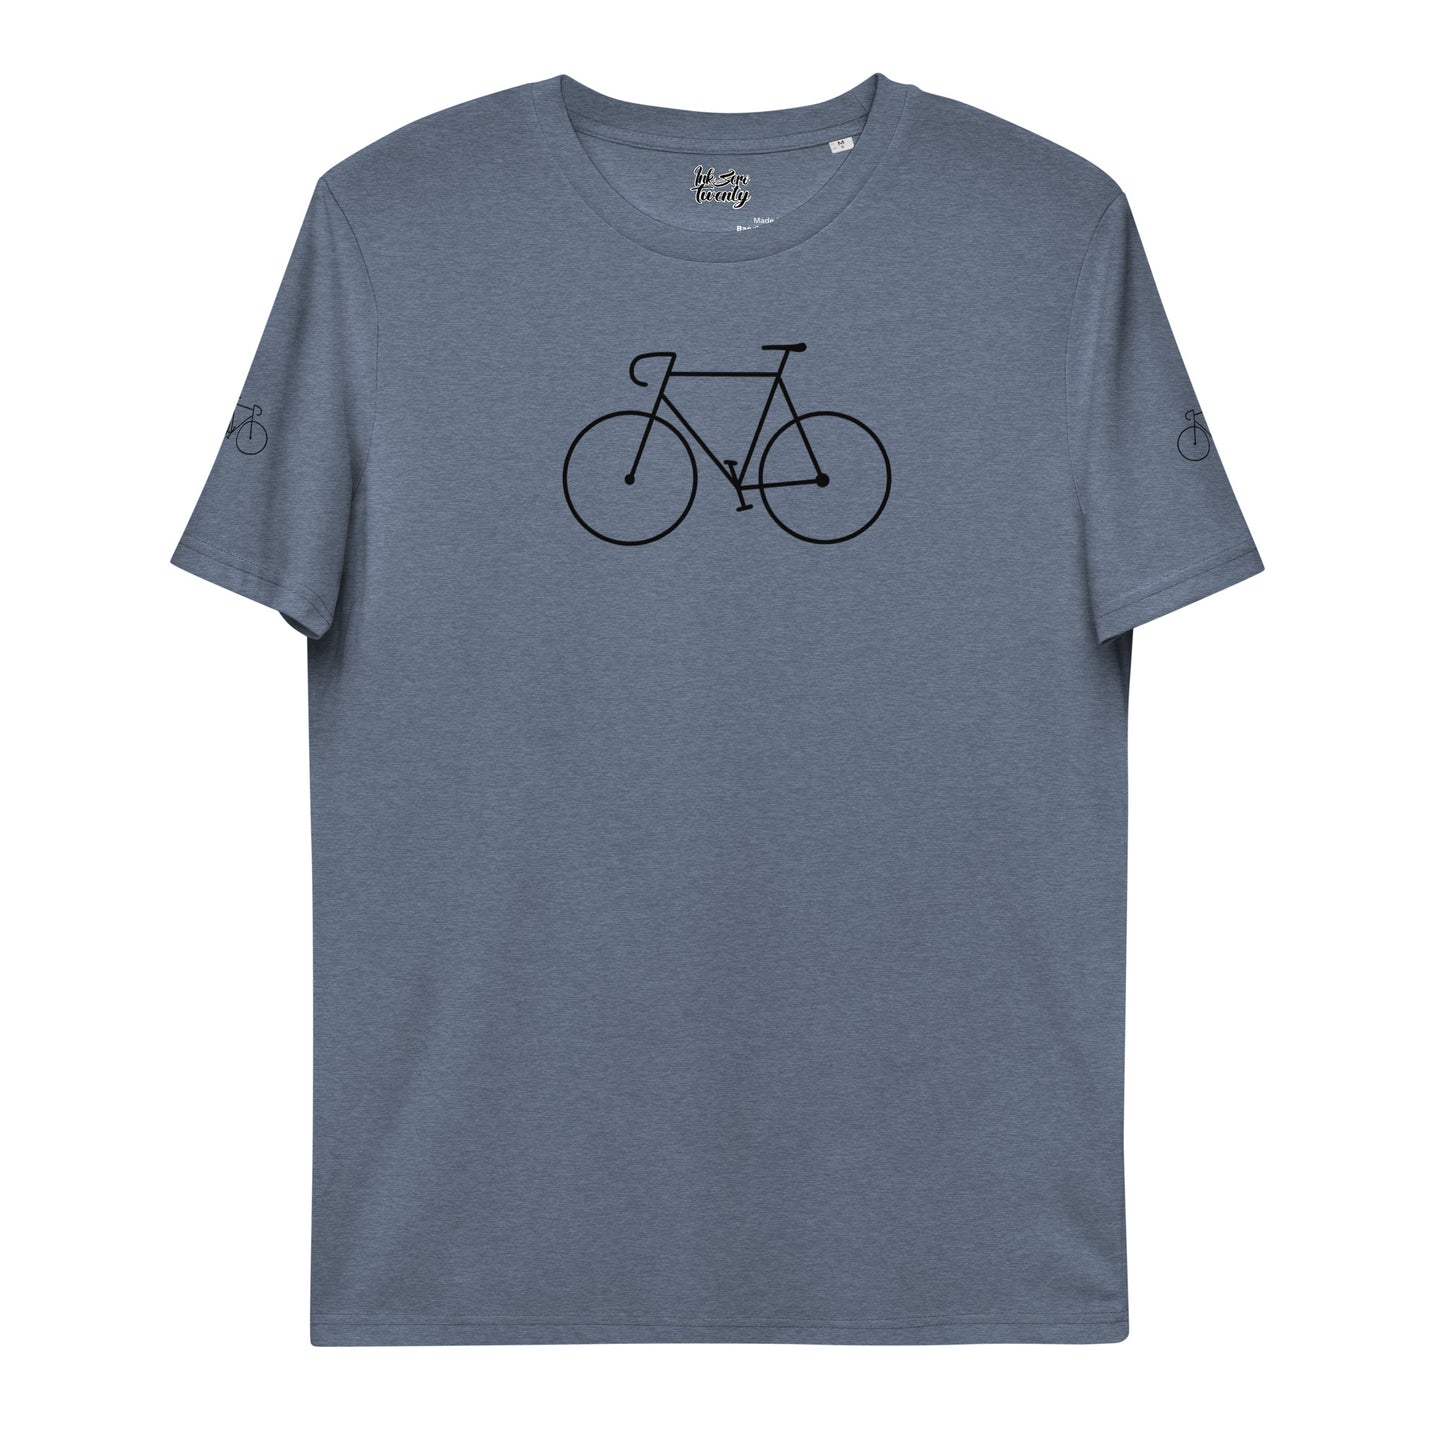 Unisex organic cotton t-shirt black bicycle tattoo print